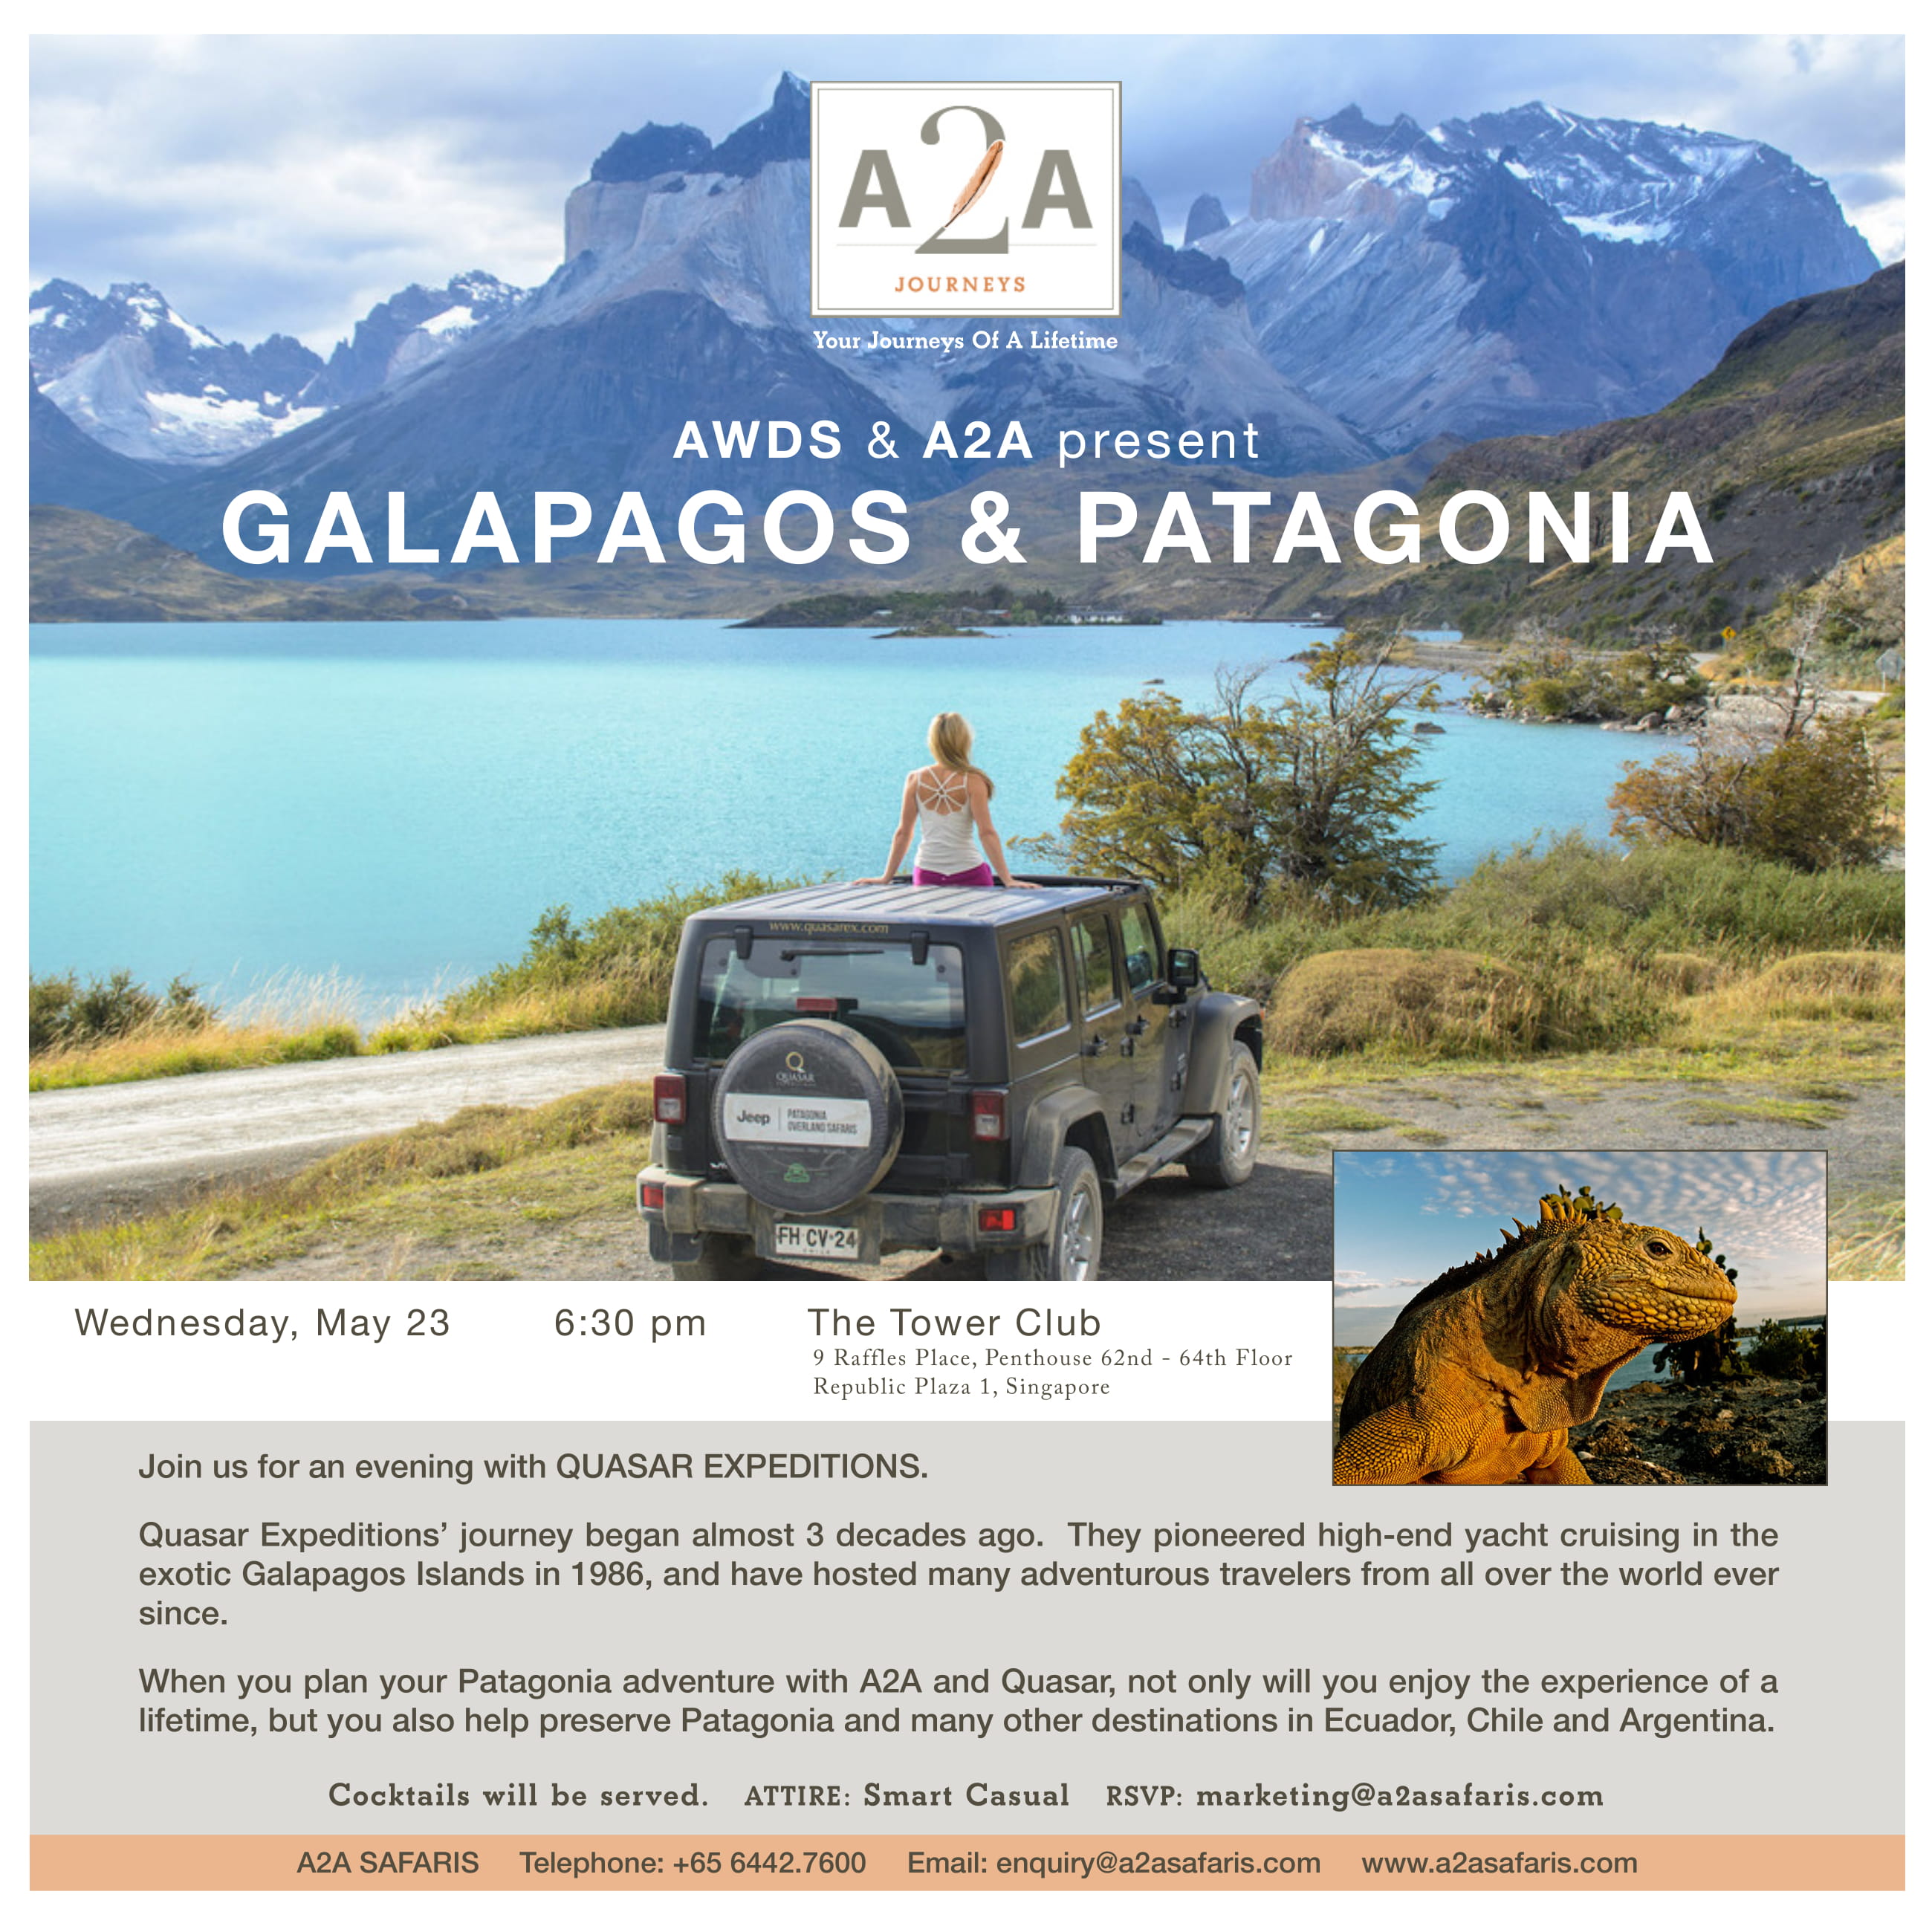 AWDS & A2A present Galapagos & Patagonia